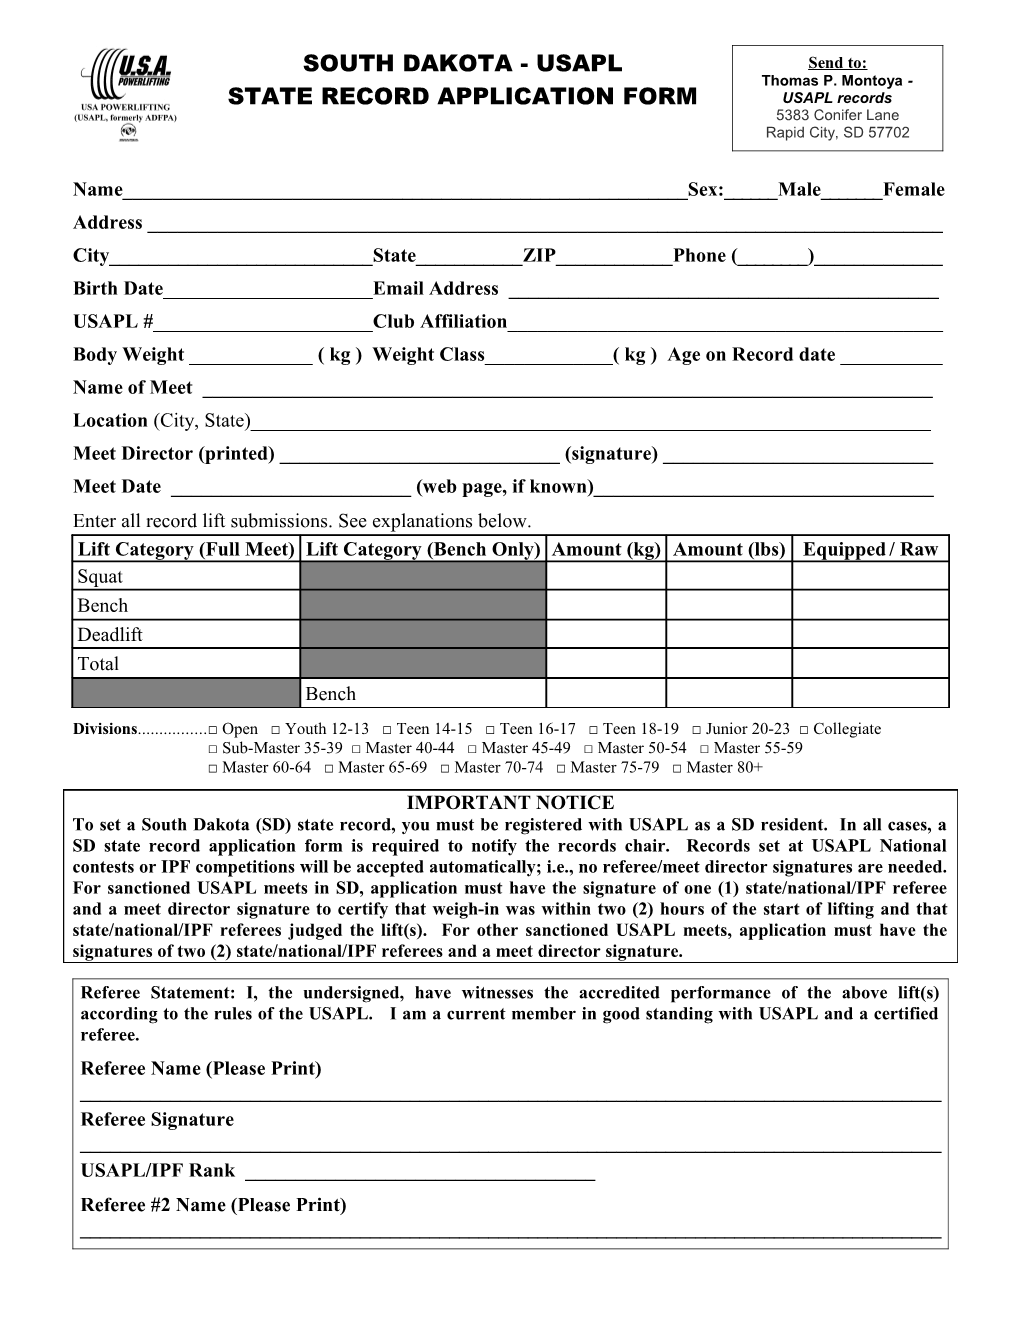 South Dakota Usapl State Record Application Form